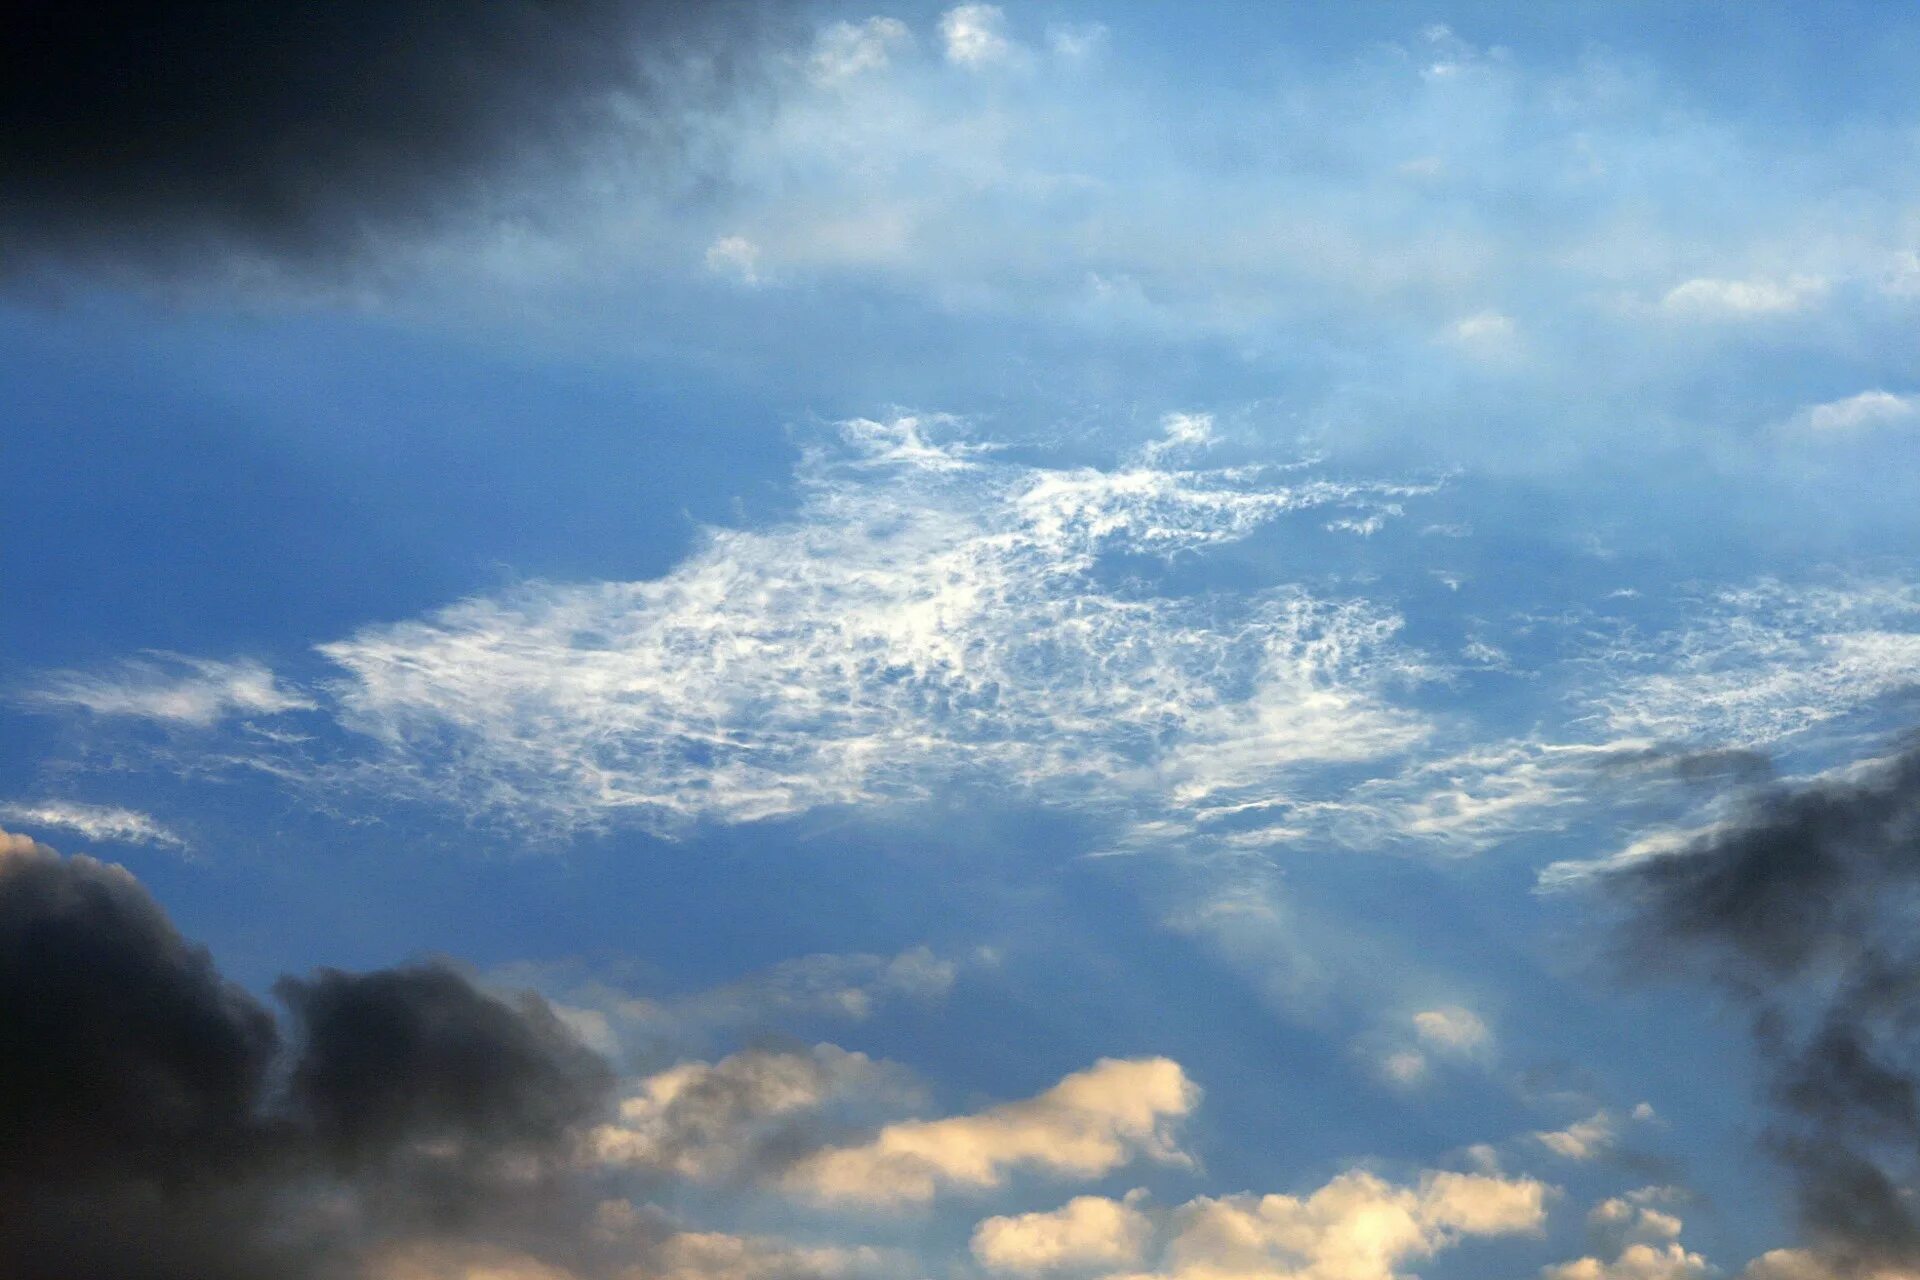 Автор облака плывут облака. Облака плывут. Пушистые облака. По небу плывут облака. Движение облаков.